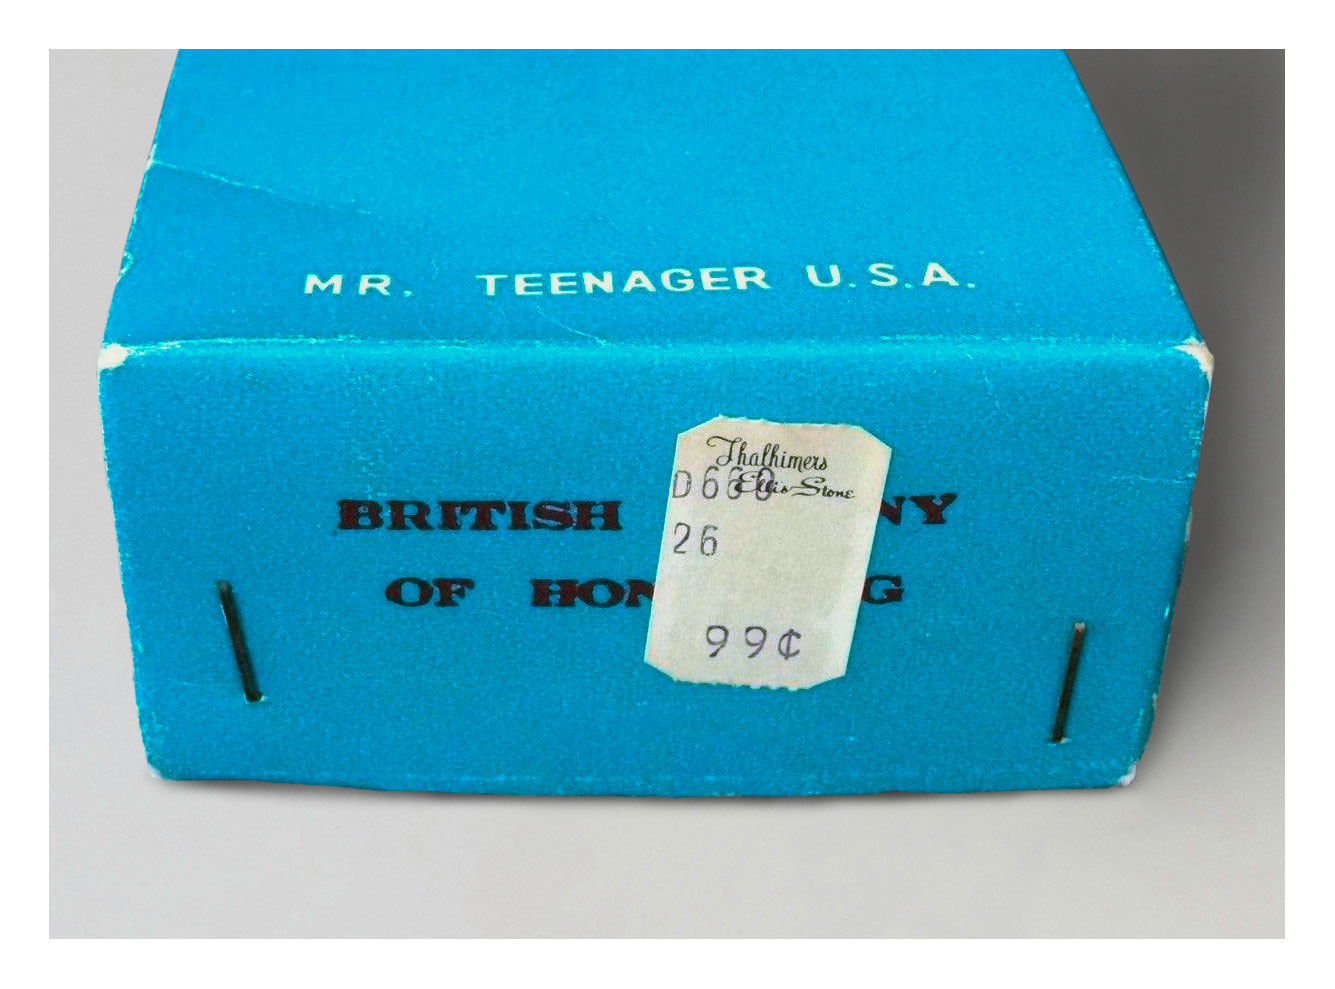 Mr. Teenager U.S.A. box lid end showing original price